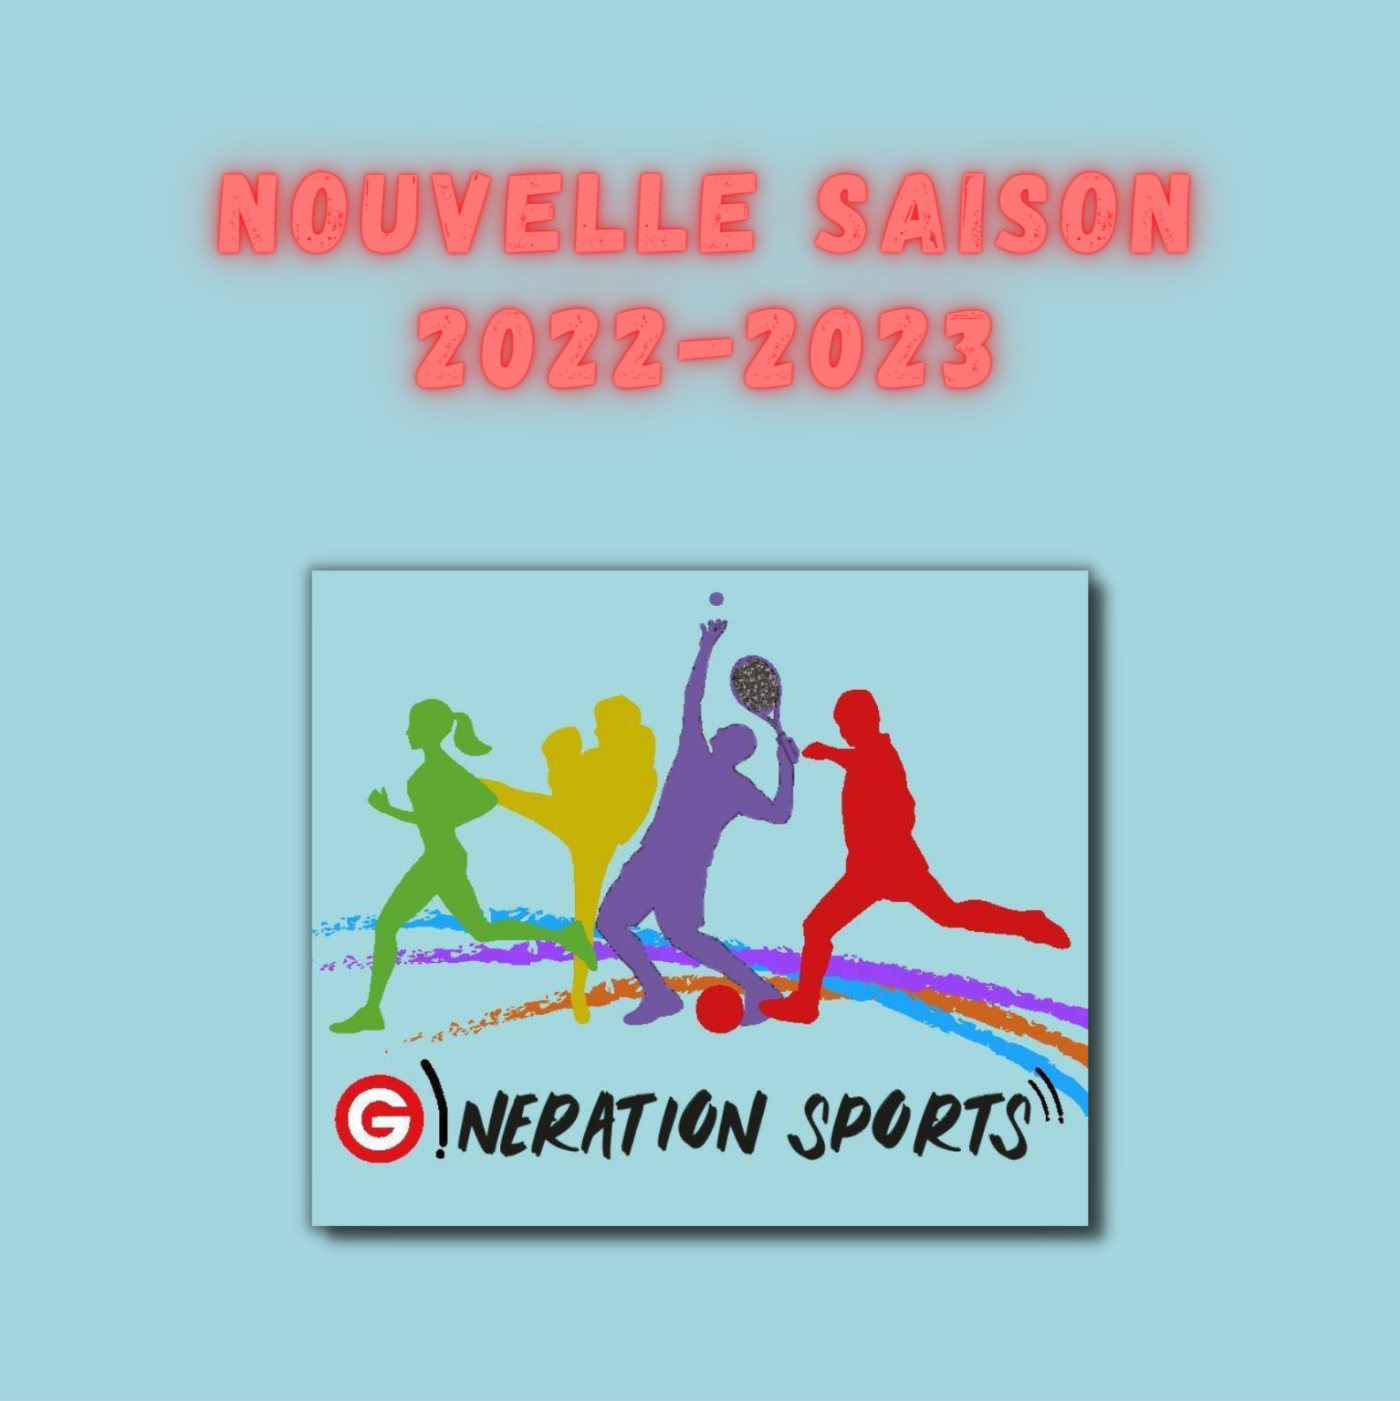 G!nération sports du 06 09 2022 Emission sportive locale et nationale G!nération sports du 06 09 2022